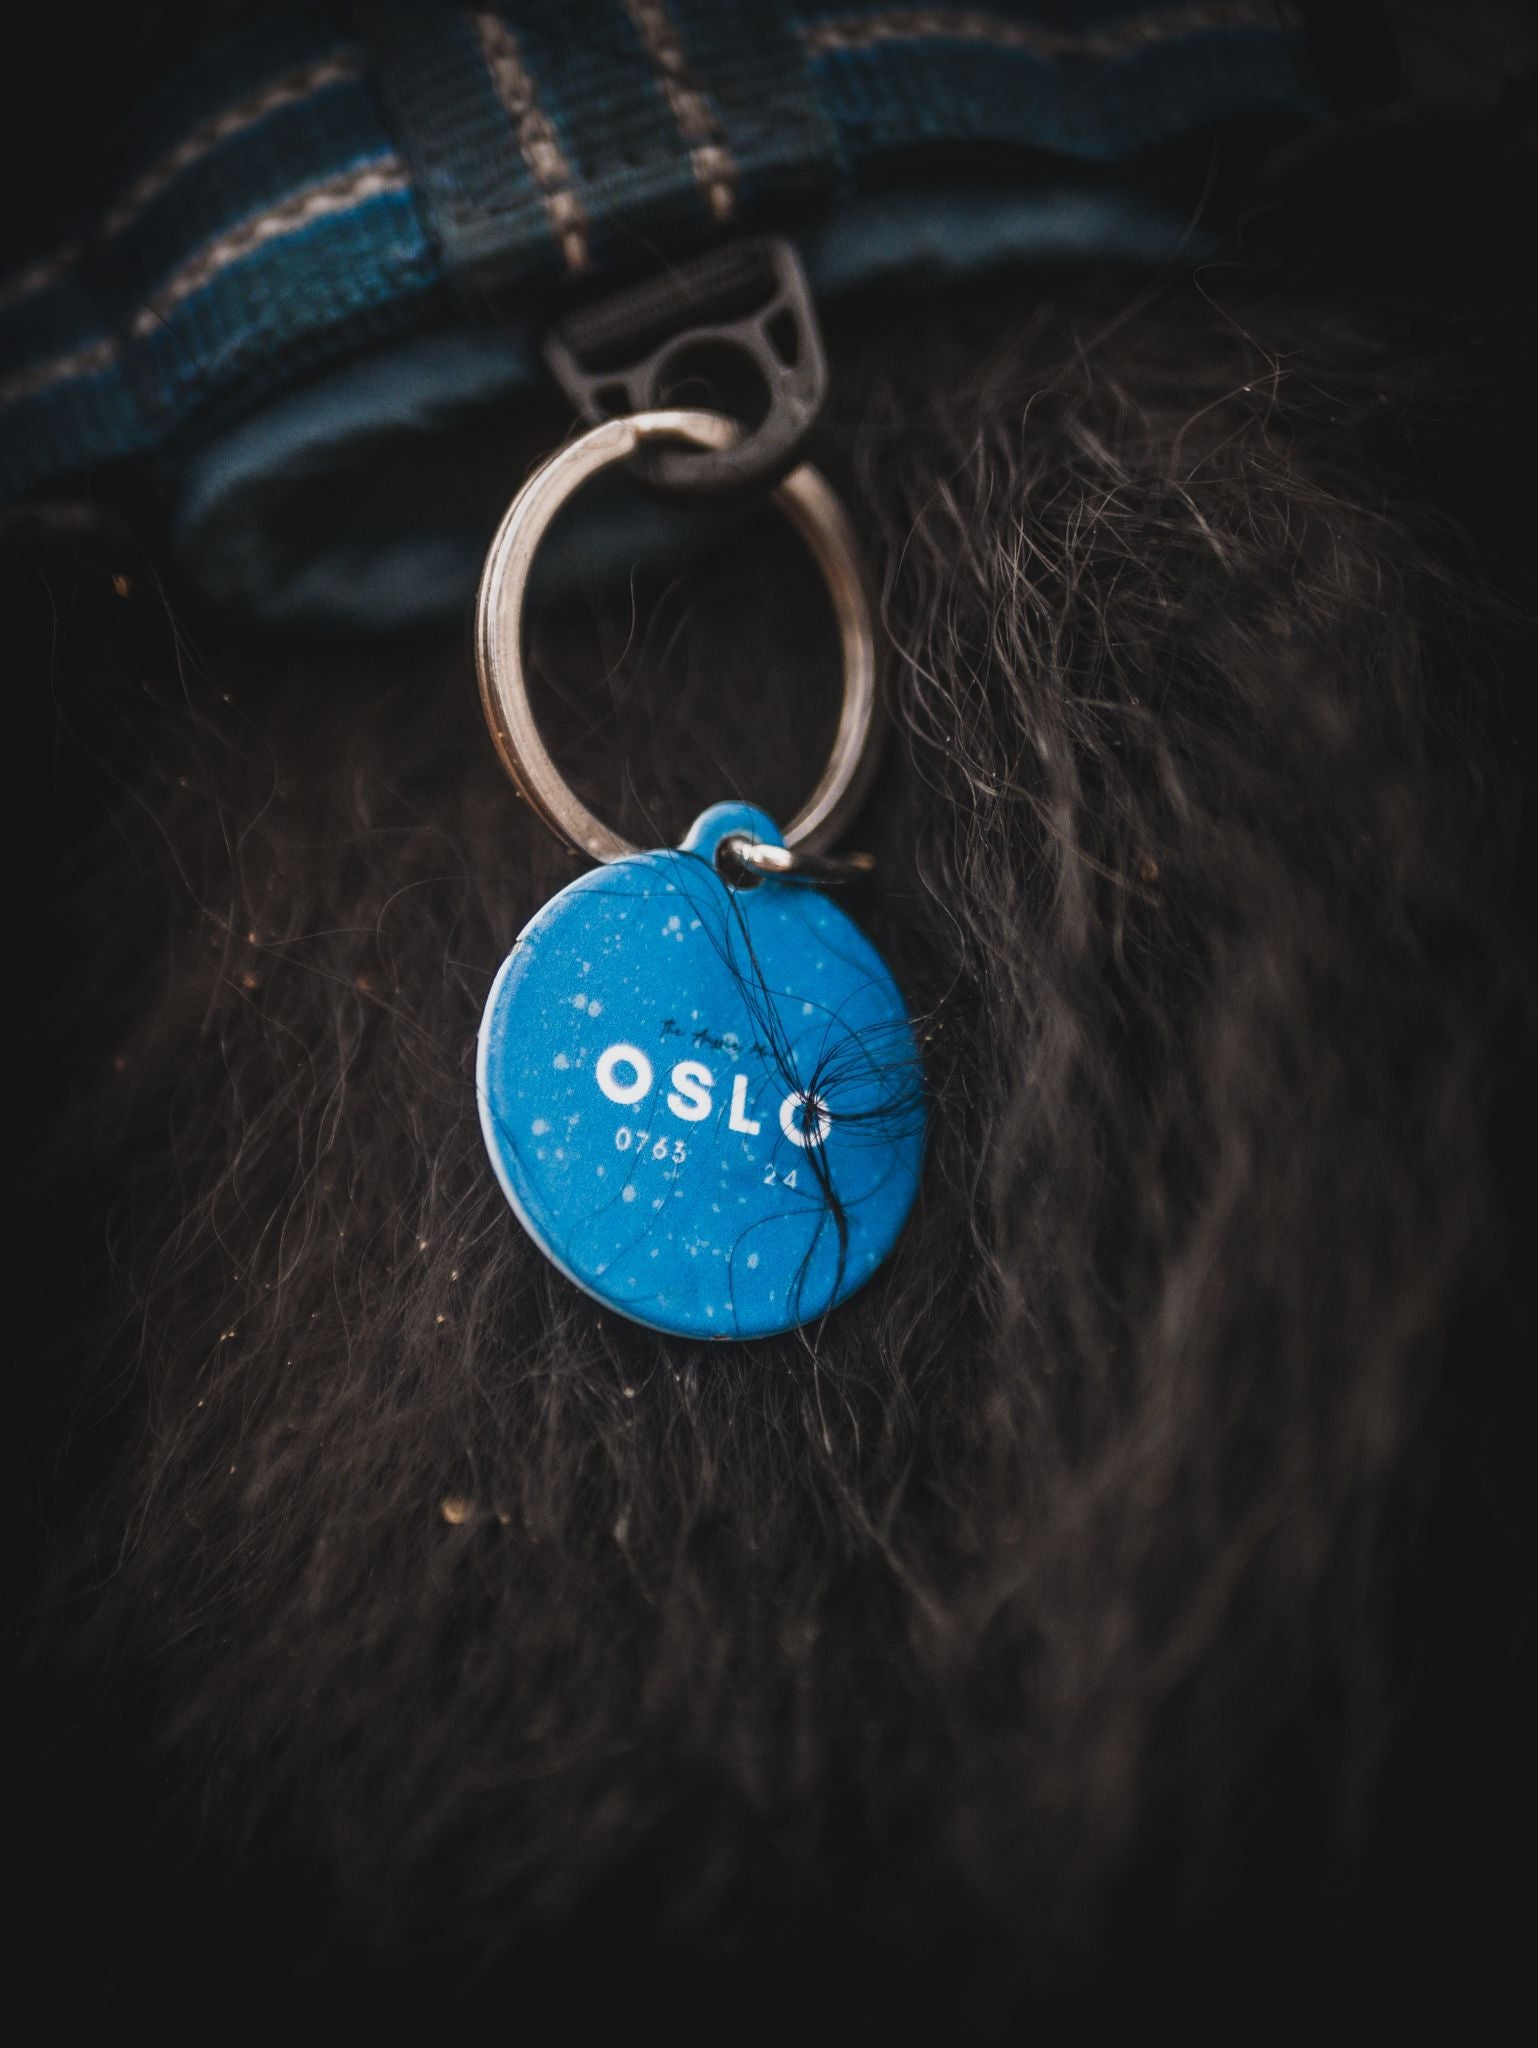 adorable custom dog tag to match your dog's favorite dog collar!